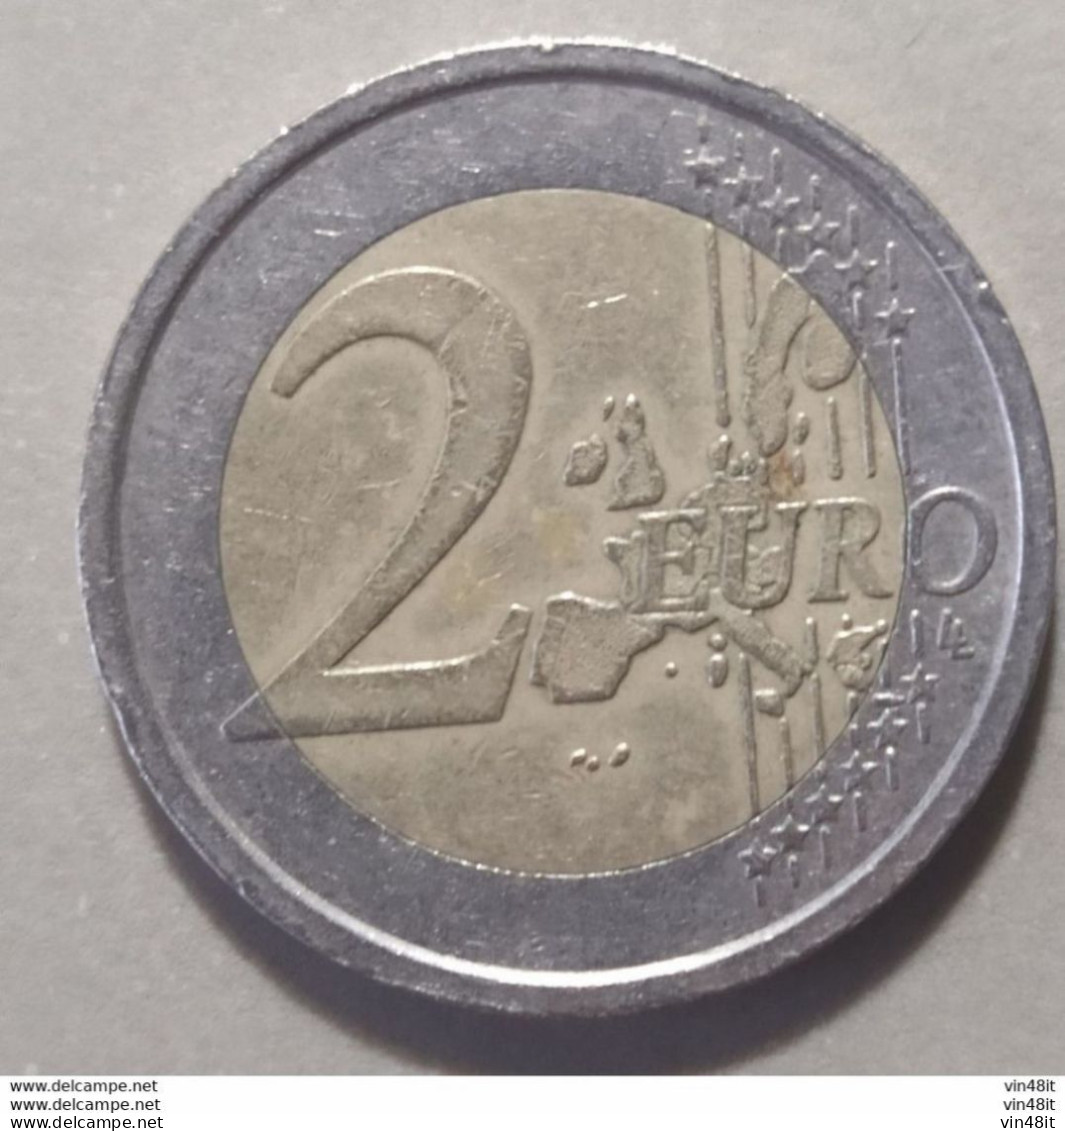 2019  -  AUSTRIA  -  MONETA IN EURO - DEL VALORE DI  2,00  EURO   - USATA - Austria